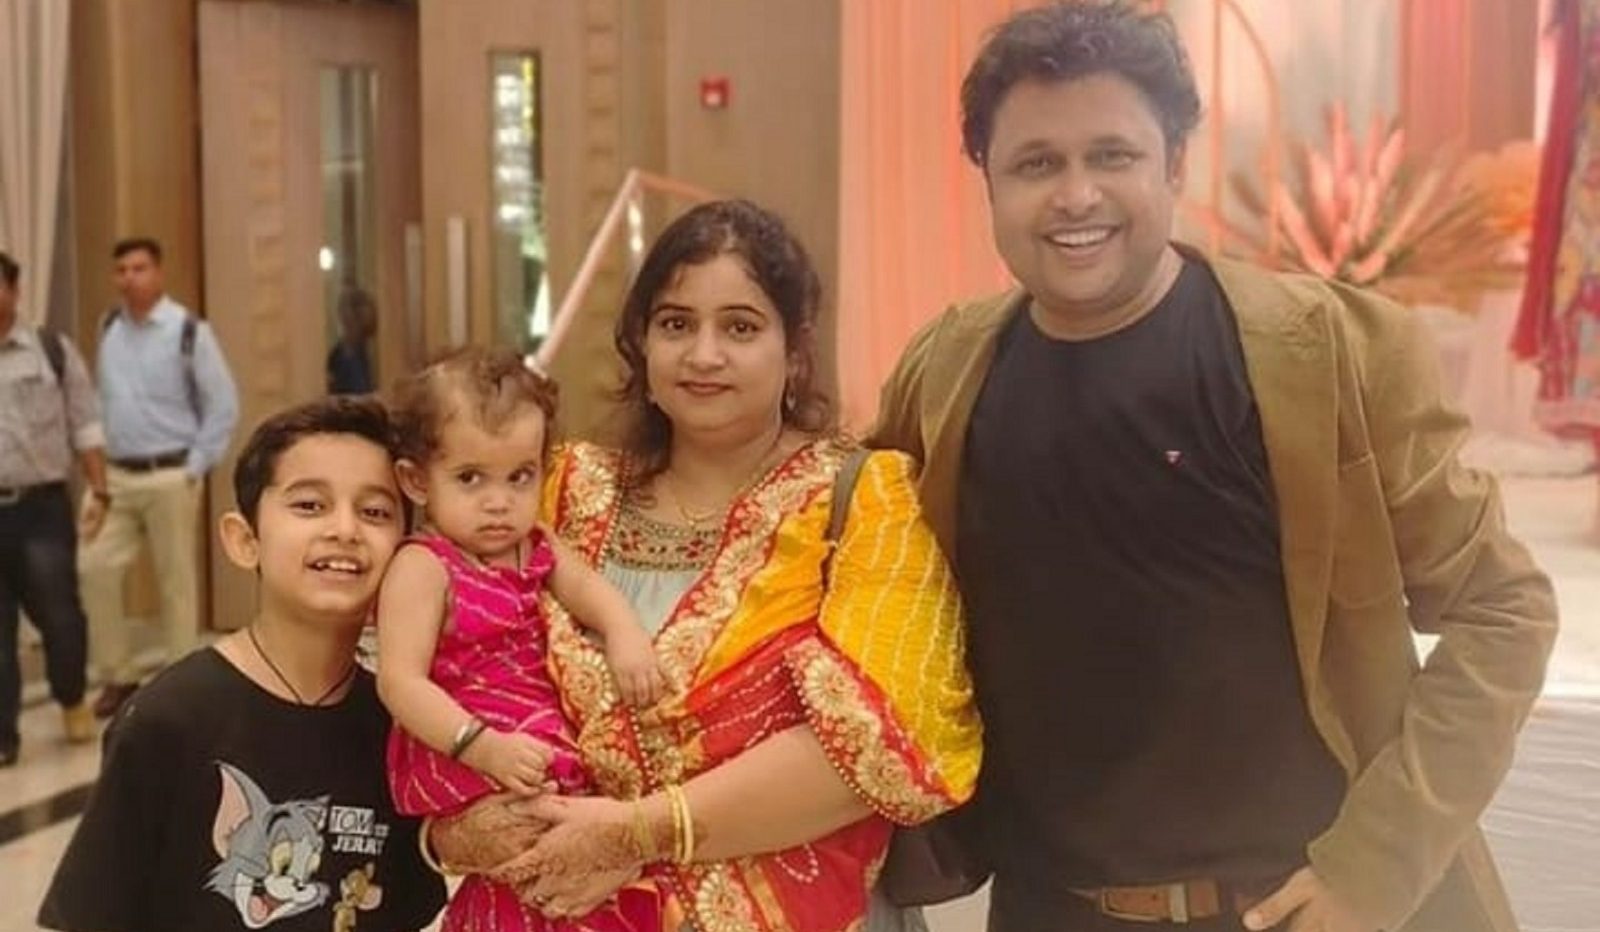 &TV actors Aayudh Bhanushal, Yogesh Tripathi and Shubhangi Tripathi get rejuvenated by  spending time with family!